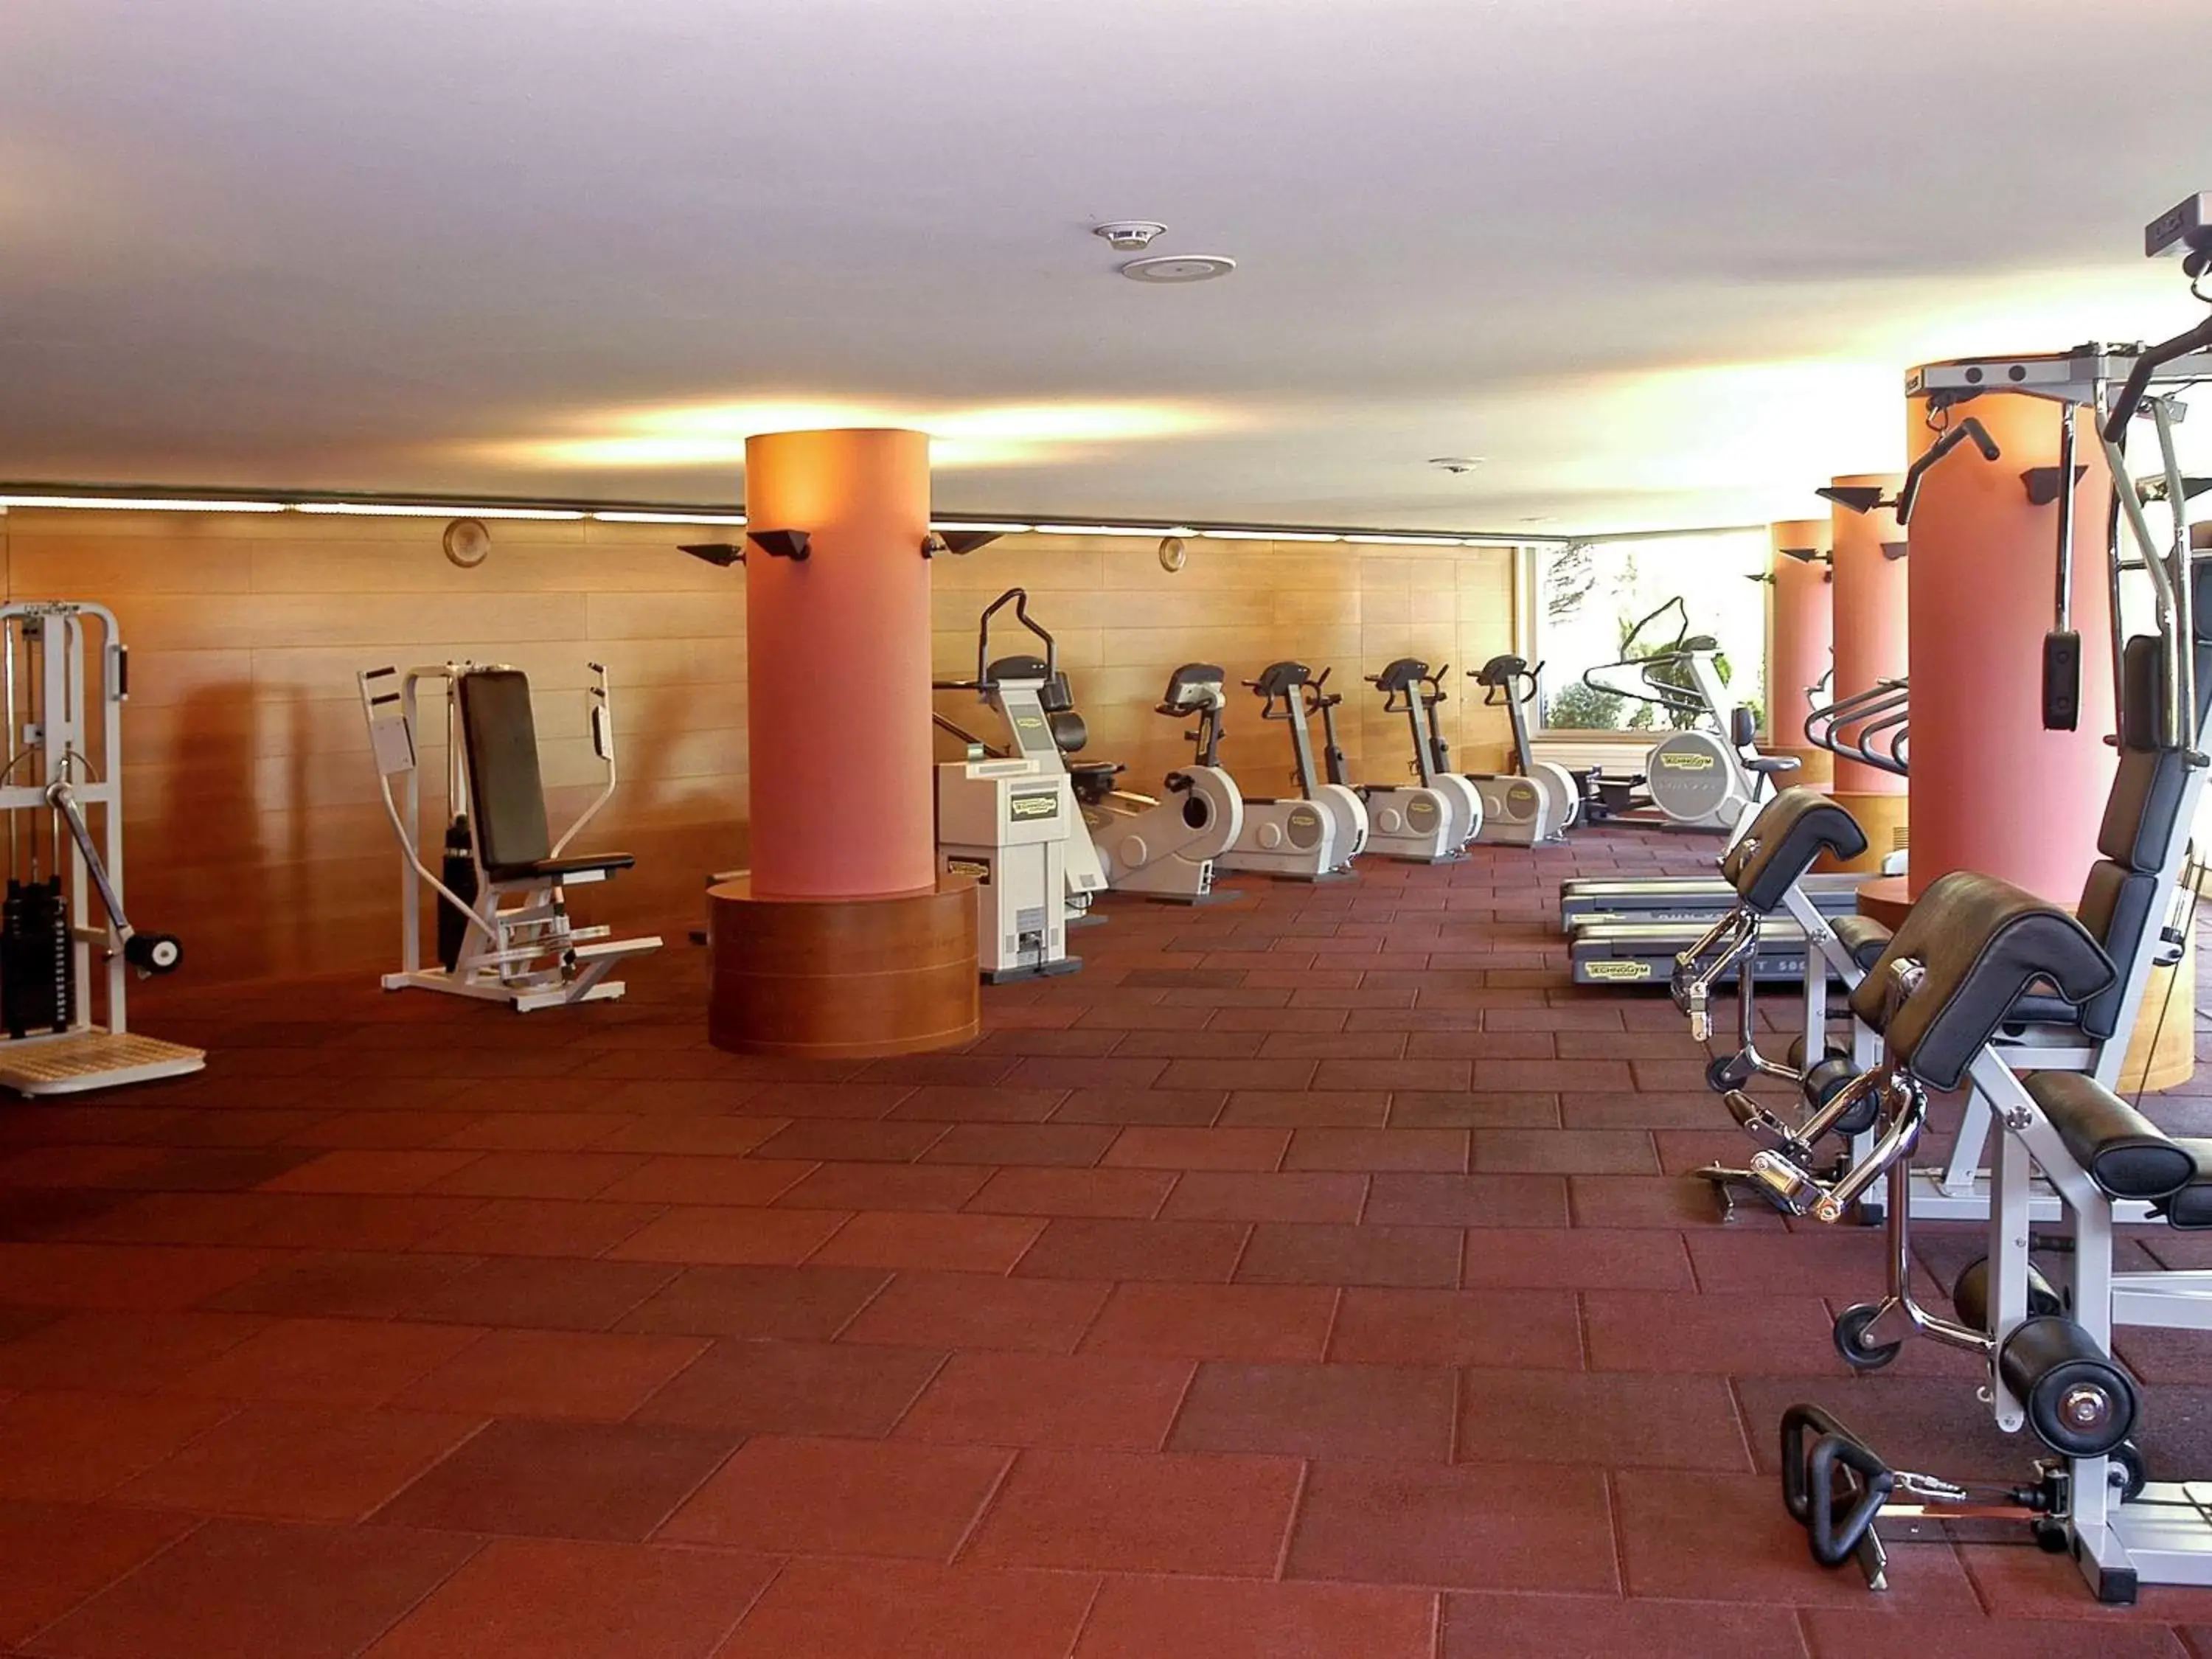 Fitness centre/facilities, Fitness Center/Facilities in Mercure Andorra